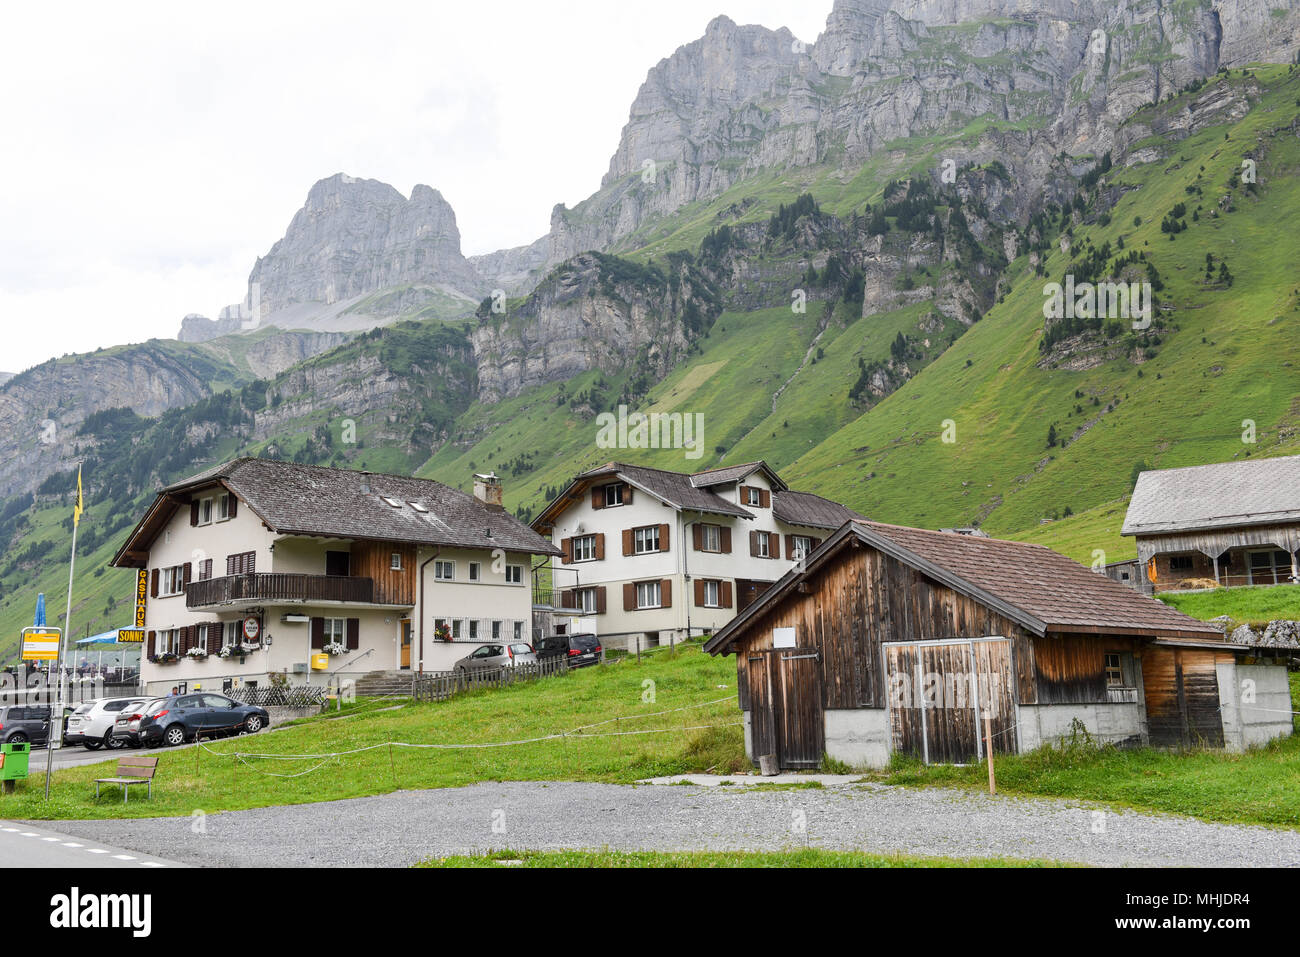 Urnerboden, Switzerland - 3 August 2017: the village of Urnerboden on the Swiss alps Stock Photo